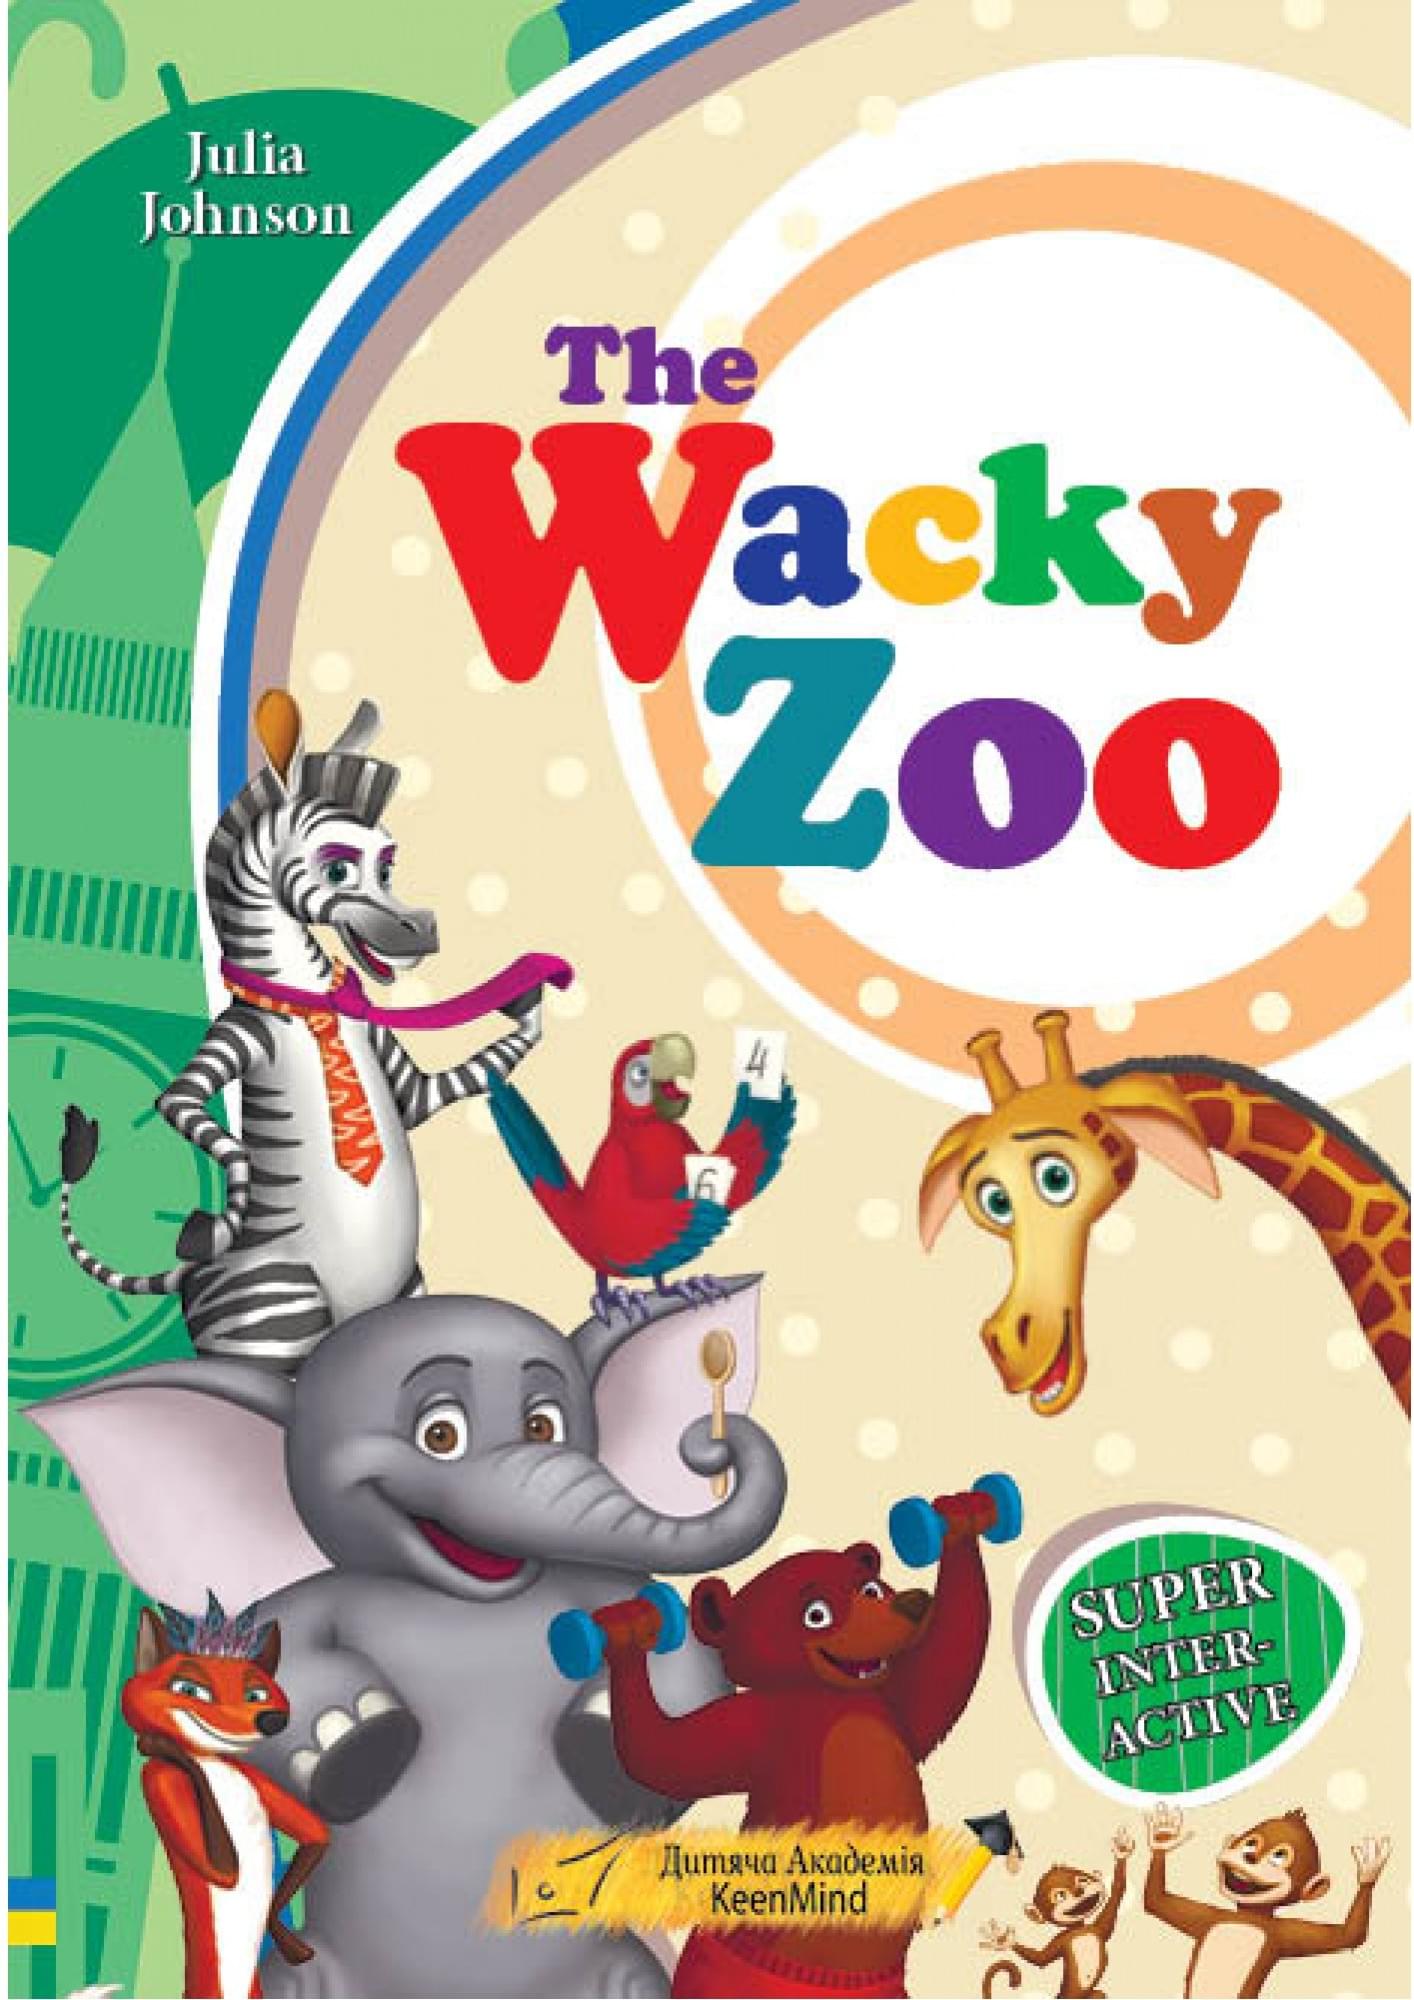 The Wacky Zoo - Julia Johnson - New Time Books